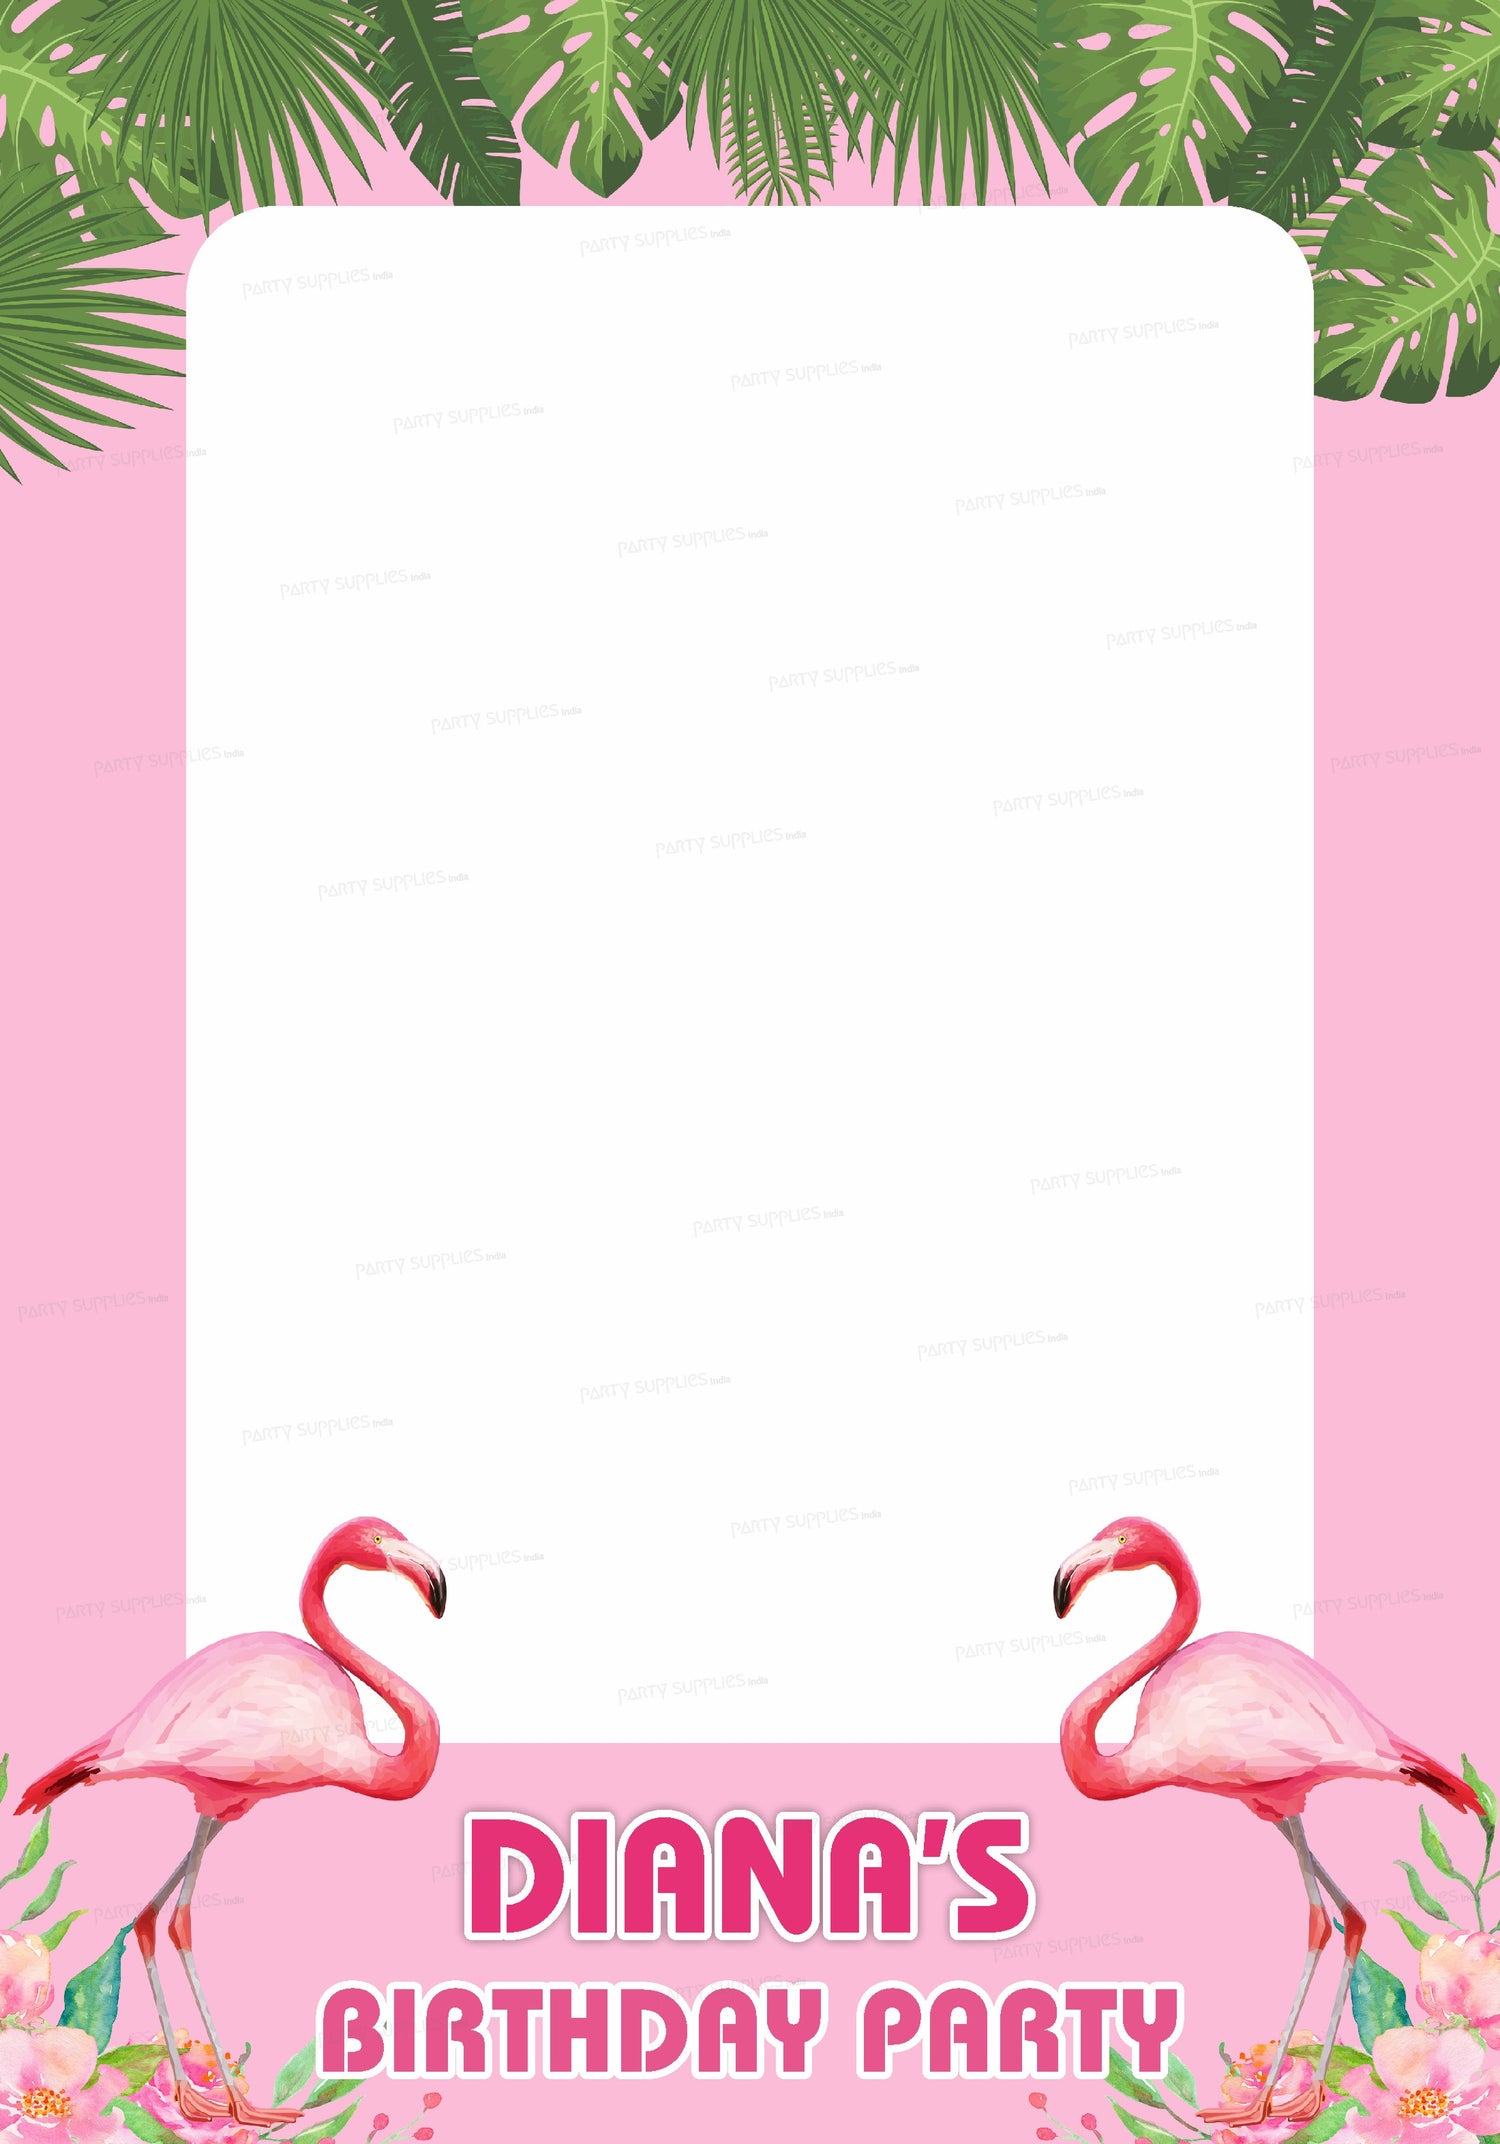 PSI Flamingo Theme Customized PhotoBooth